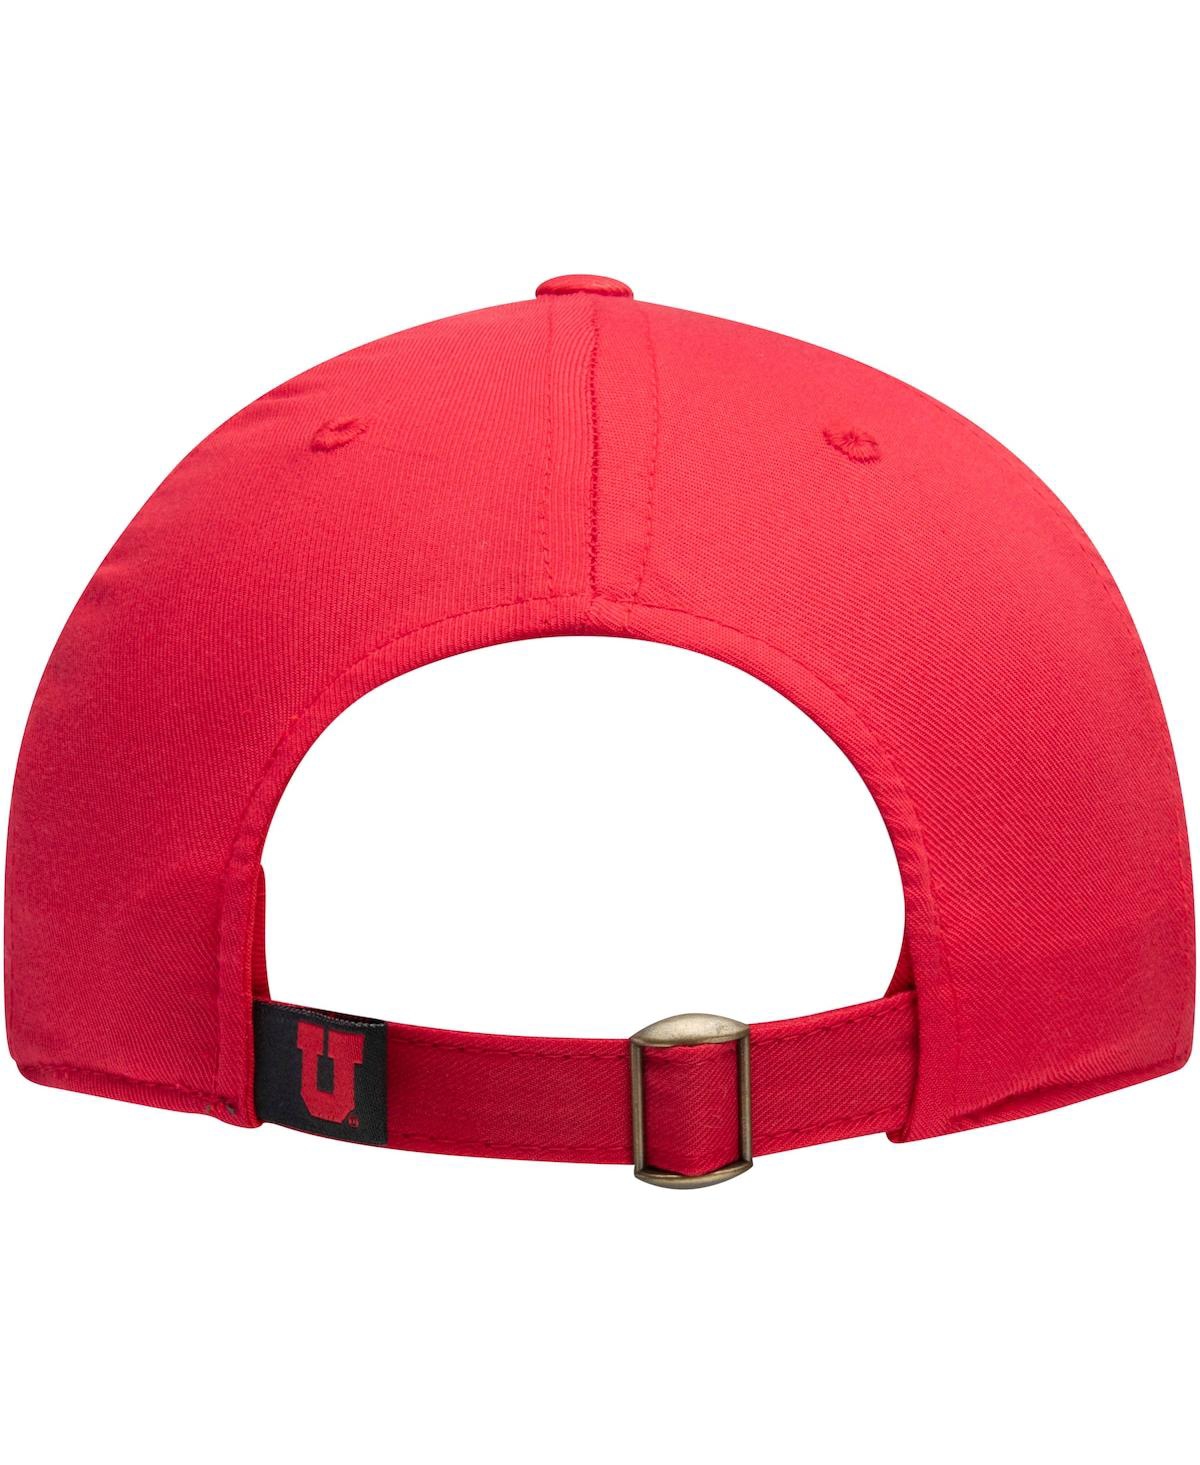 Shop Top Of The World Men's  Red Utah Utes Primary Logo Staple Adjustable Hat